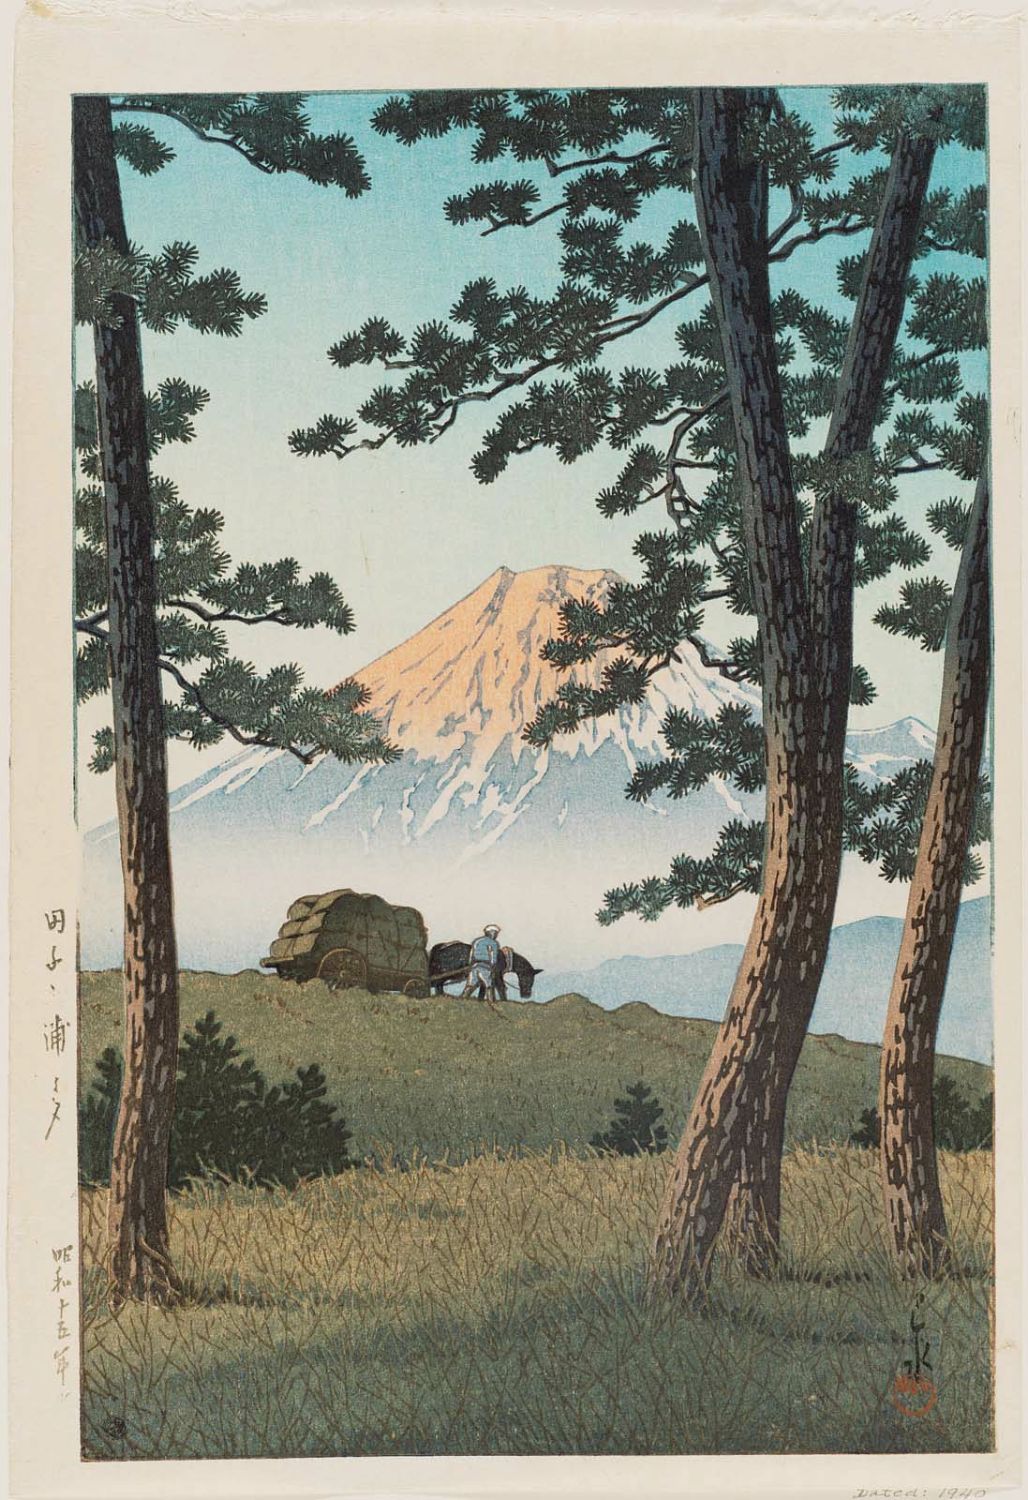 Hasui Kawase - Evening at Tago Bay (Tago no ura no yûbe), from the series Selected Views of the Tôkaidô Road (Tôkaidô fûkei senshû)